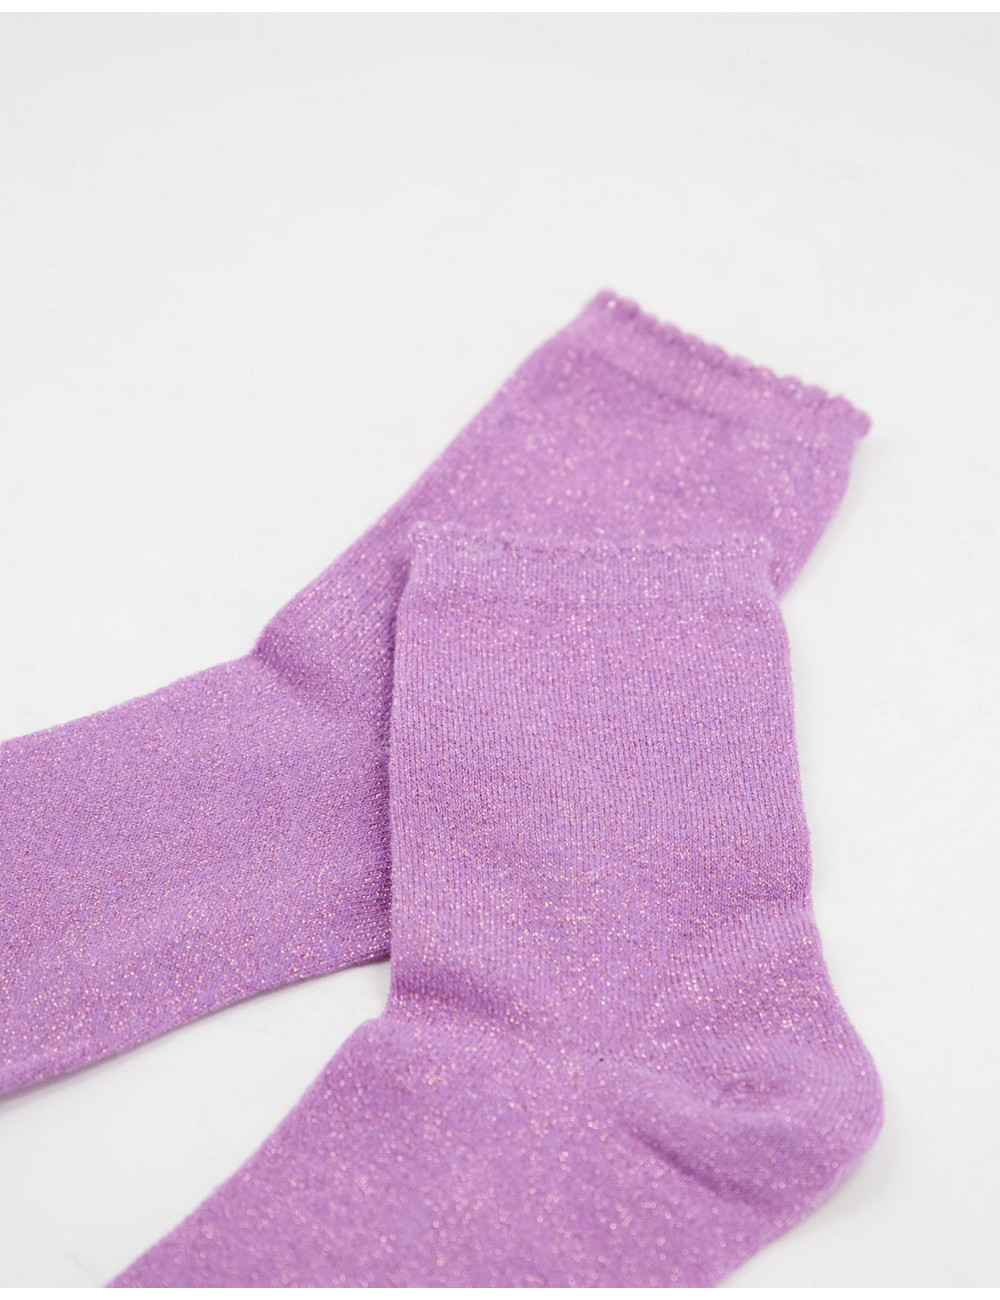 Pieces glitter sock in purple